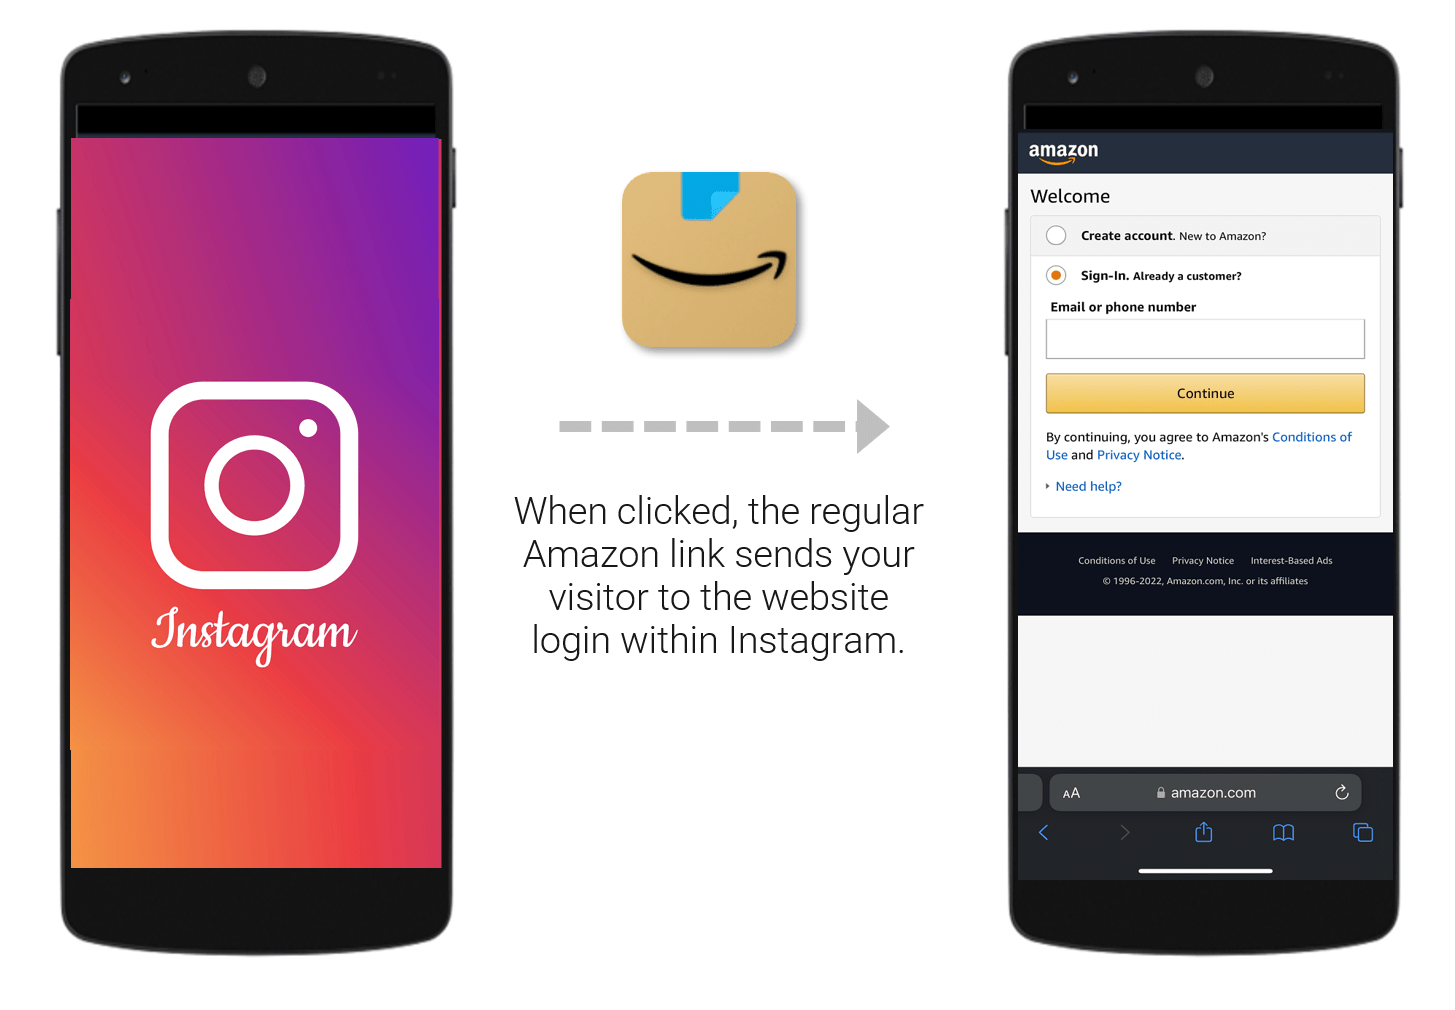 How to Generate Instagram Mobile App URLs to Open the Amazon App